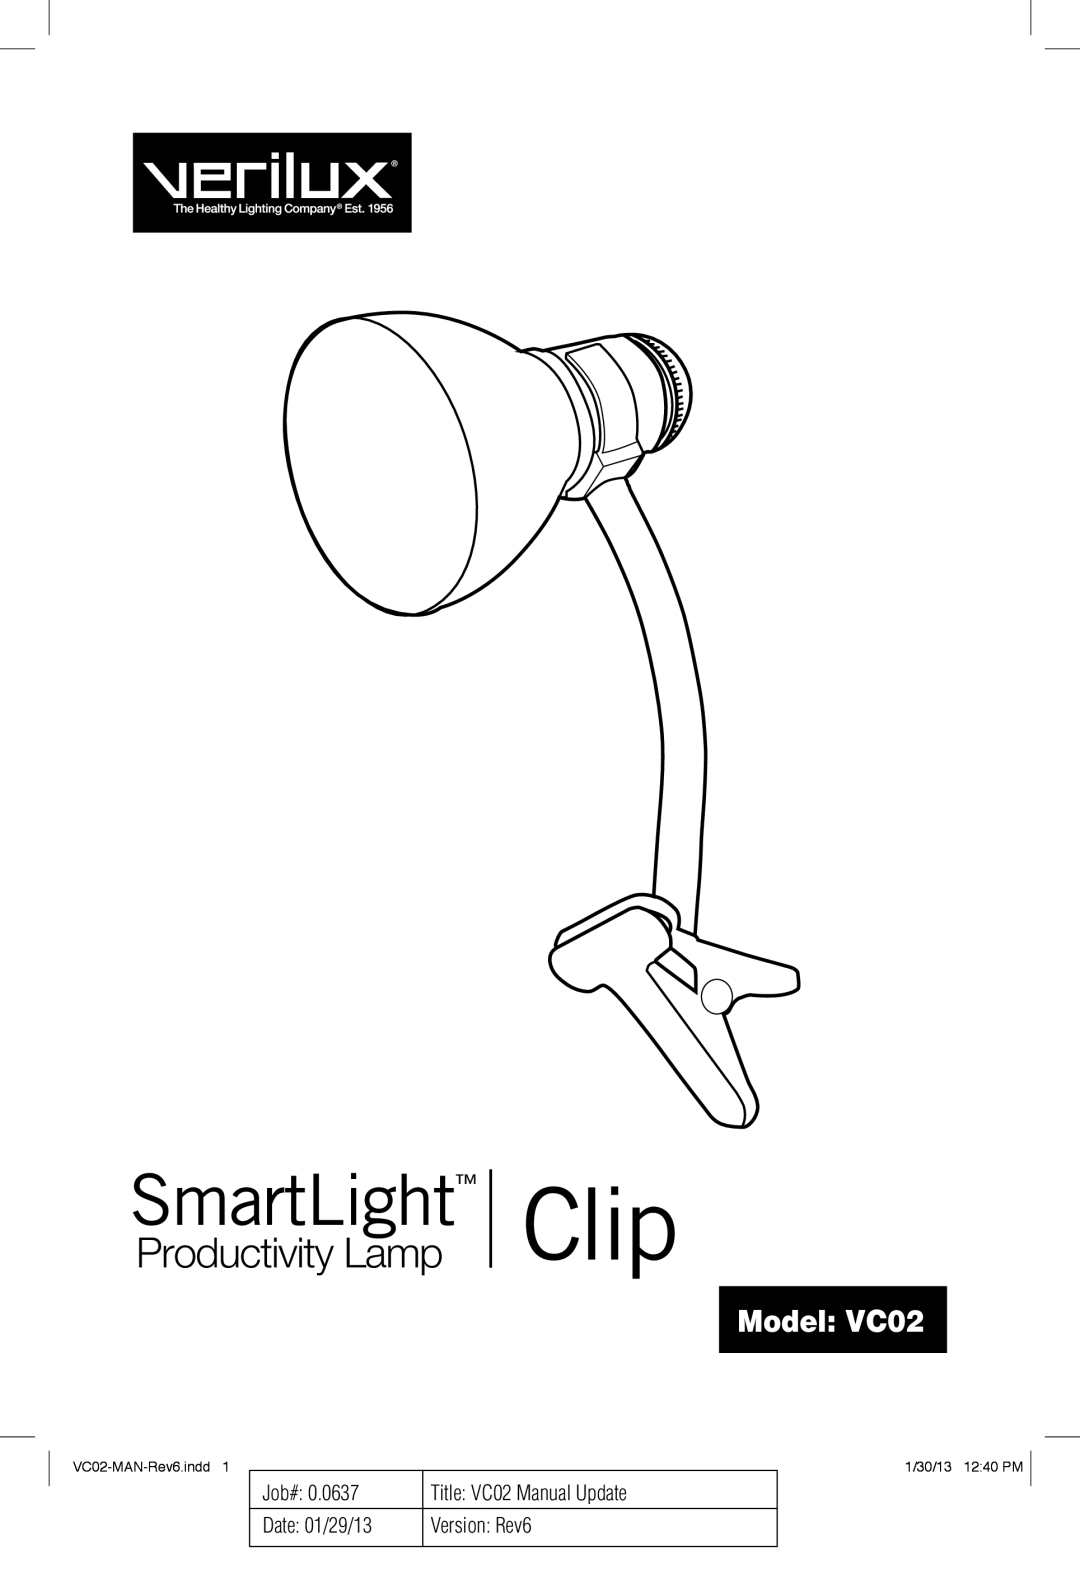 Verilux manual Clip, SmartLight, Productivity Lamp, Model VC02, Job#, Title VC02 Manual Update, Date 01/29/13 